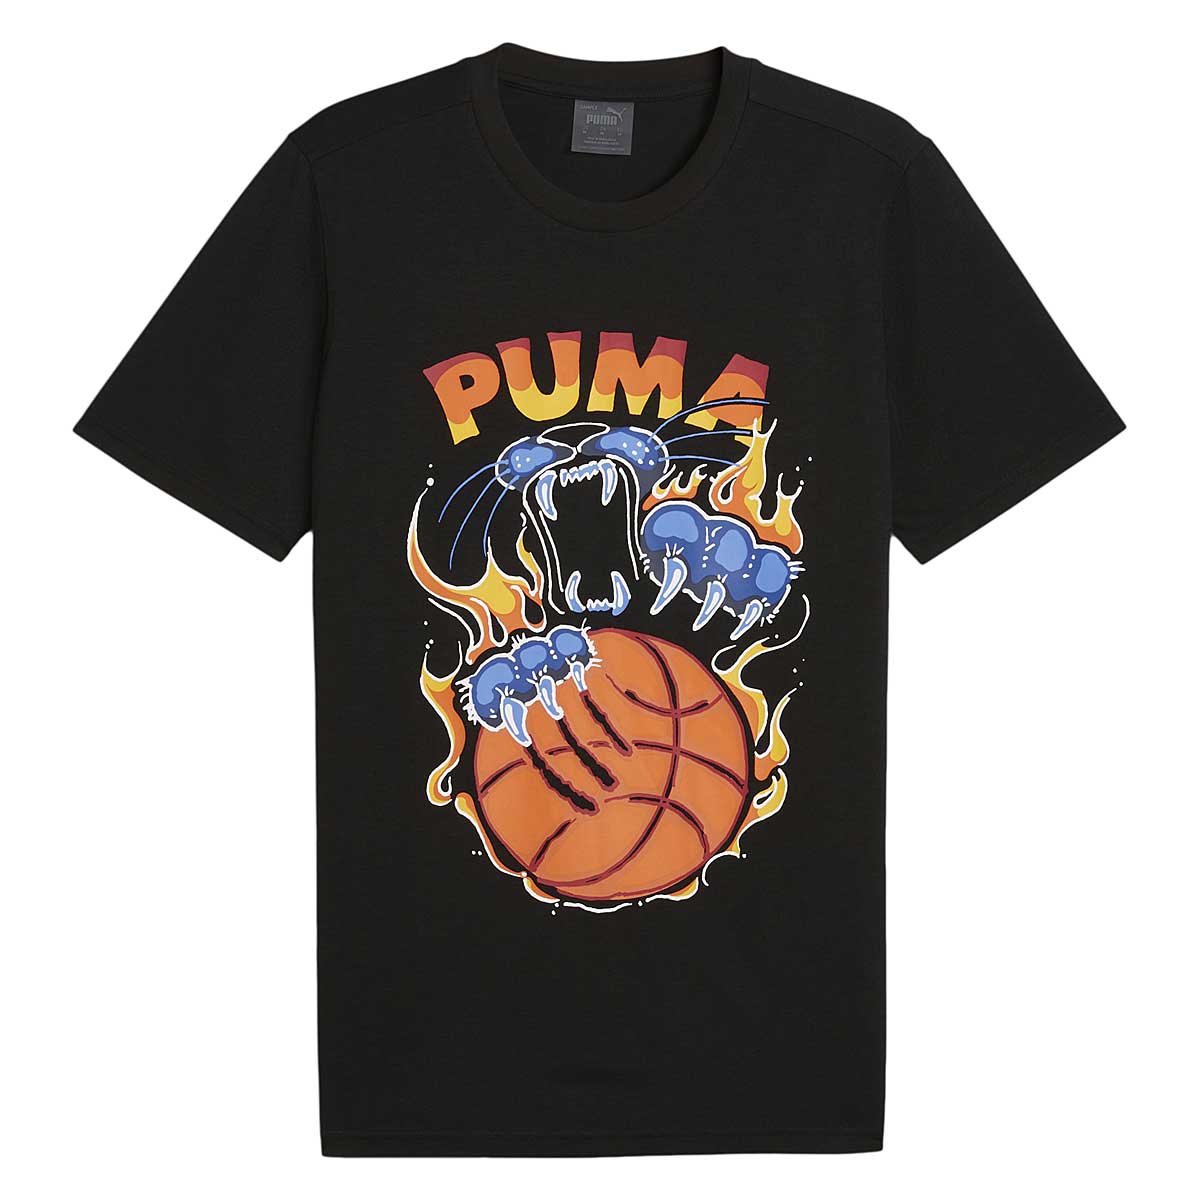 Puma Tsa T-shirt 6, Schwarz M